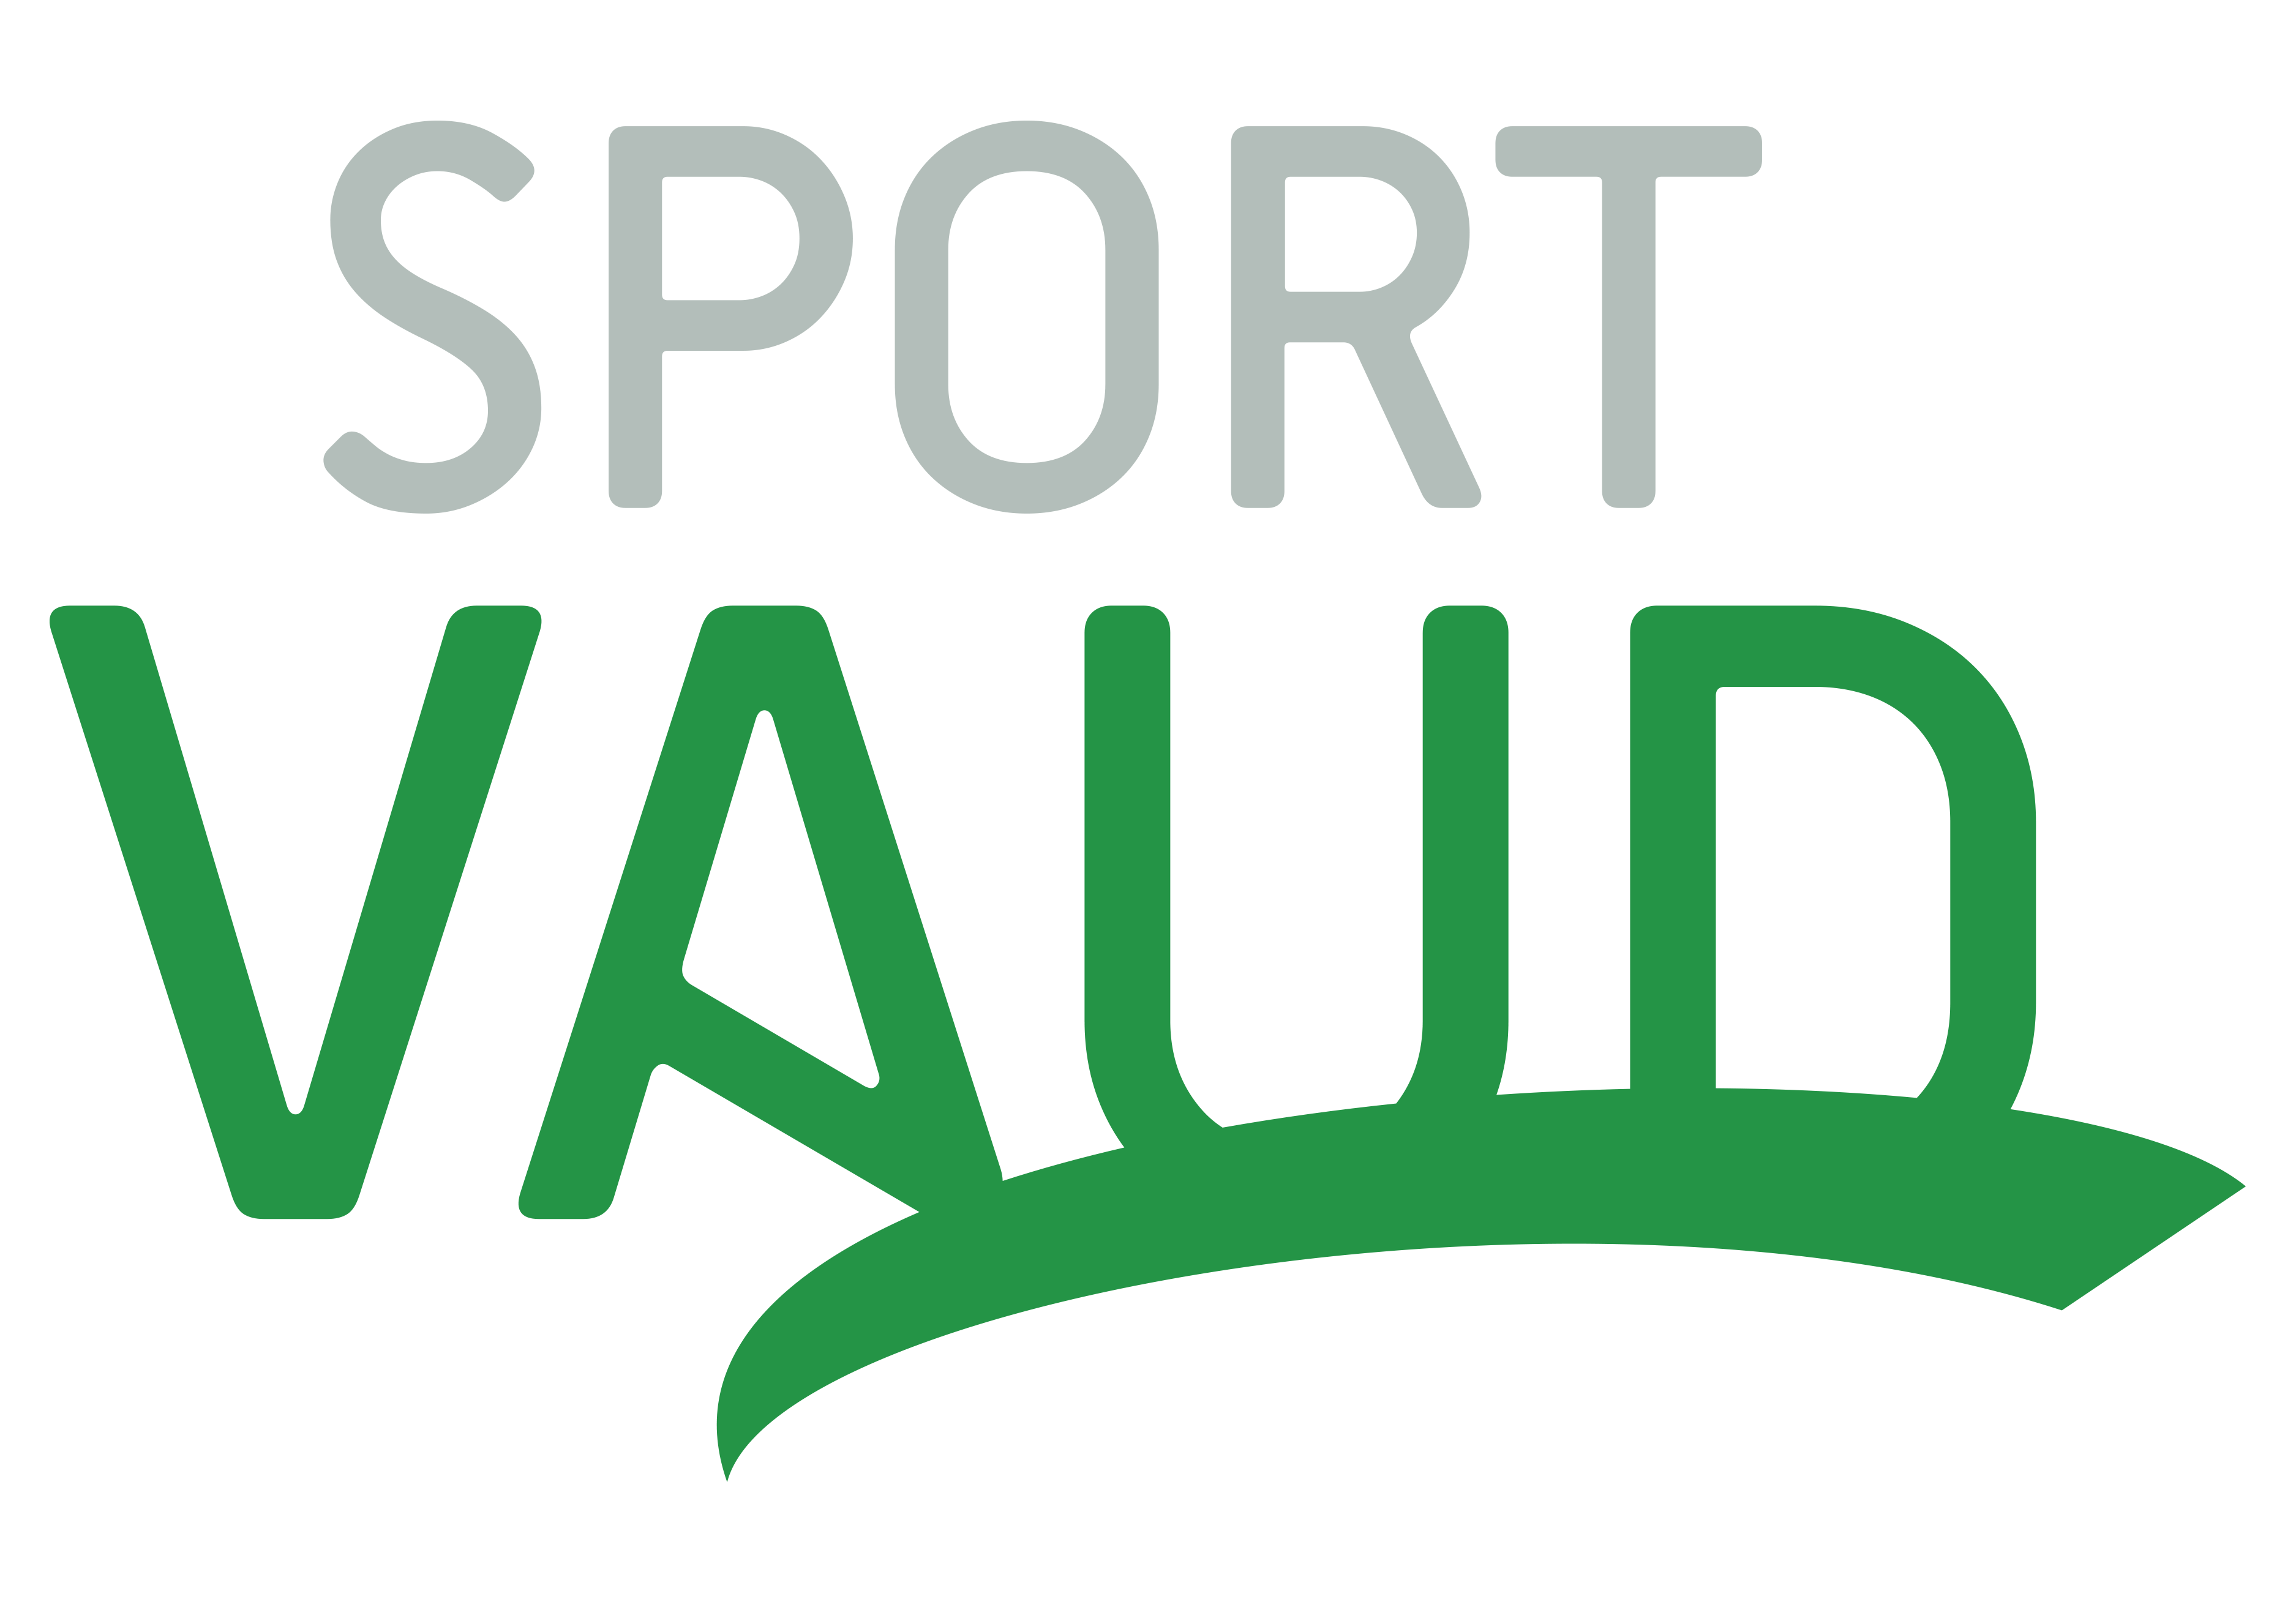 Sport Vaud